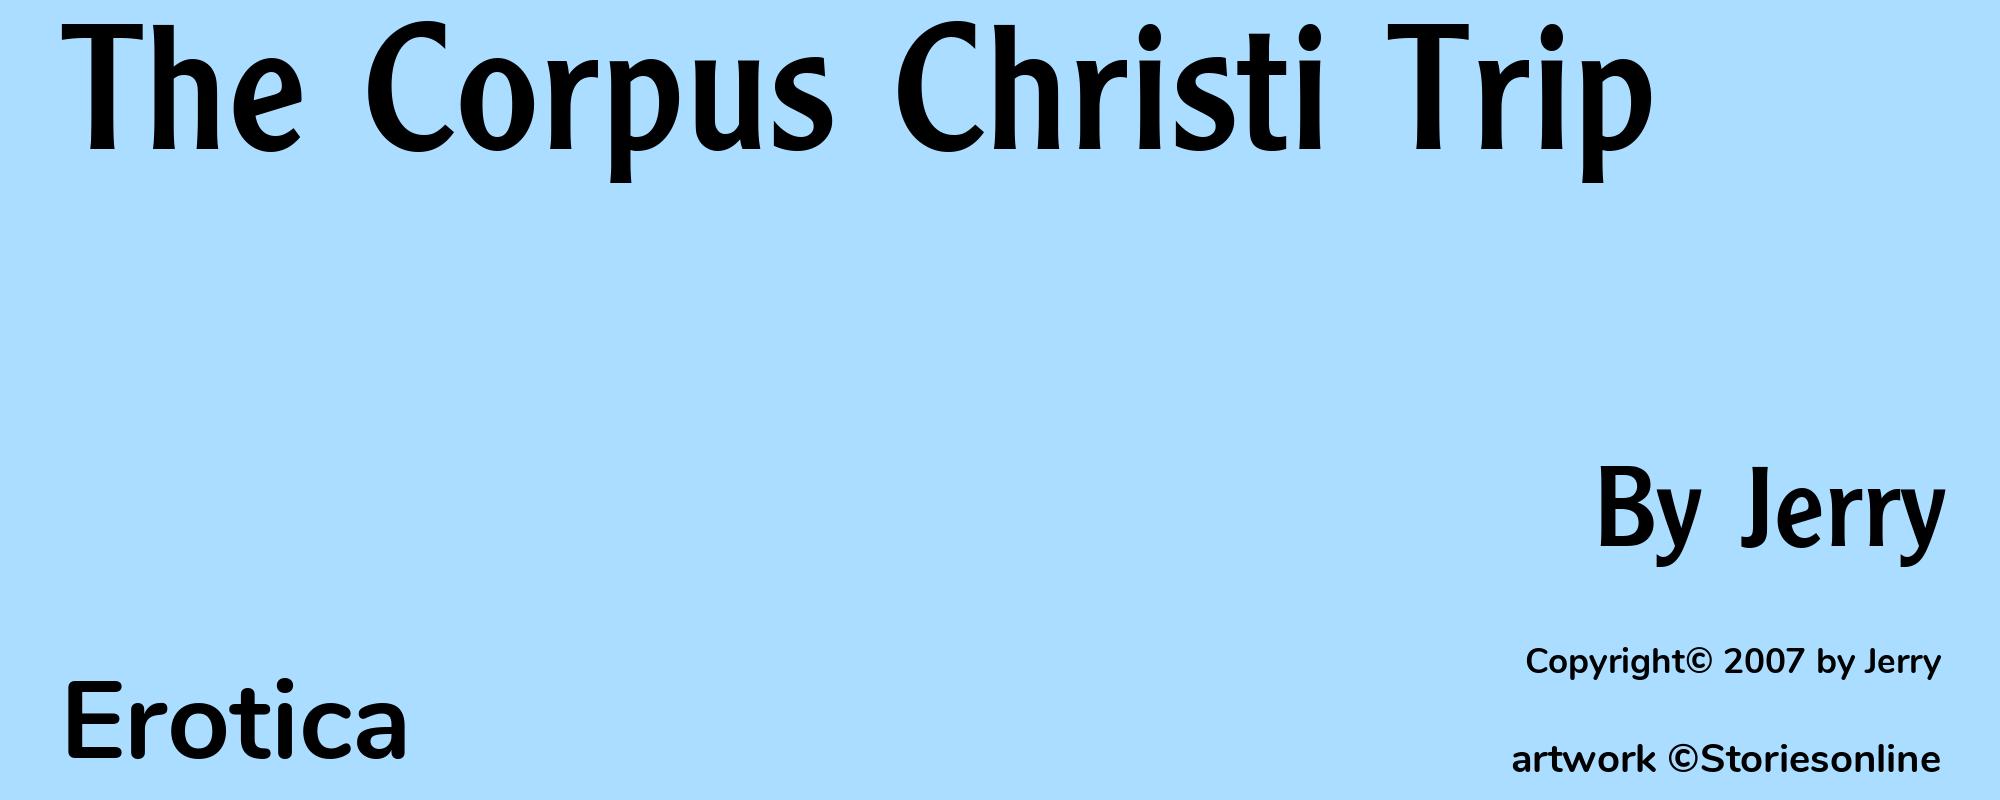 The Corpus Christi Trip - Cover